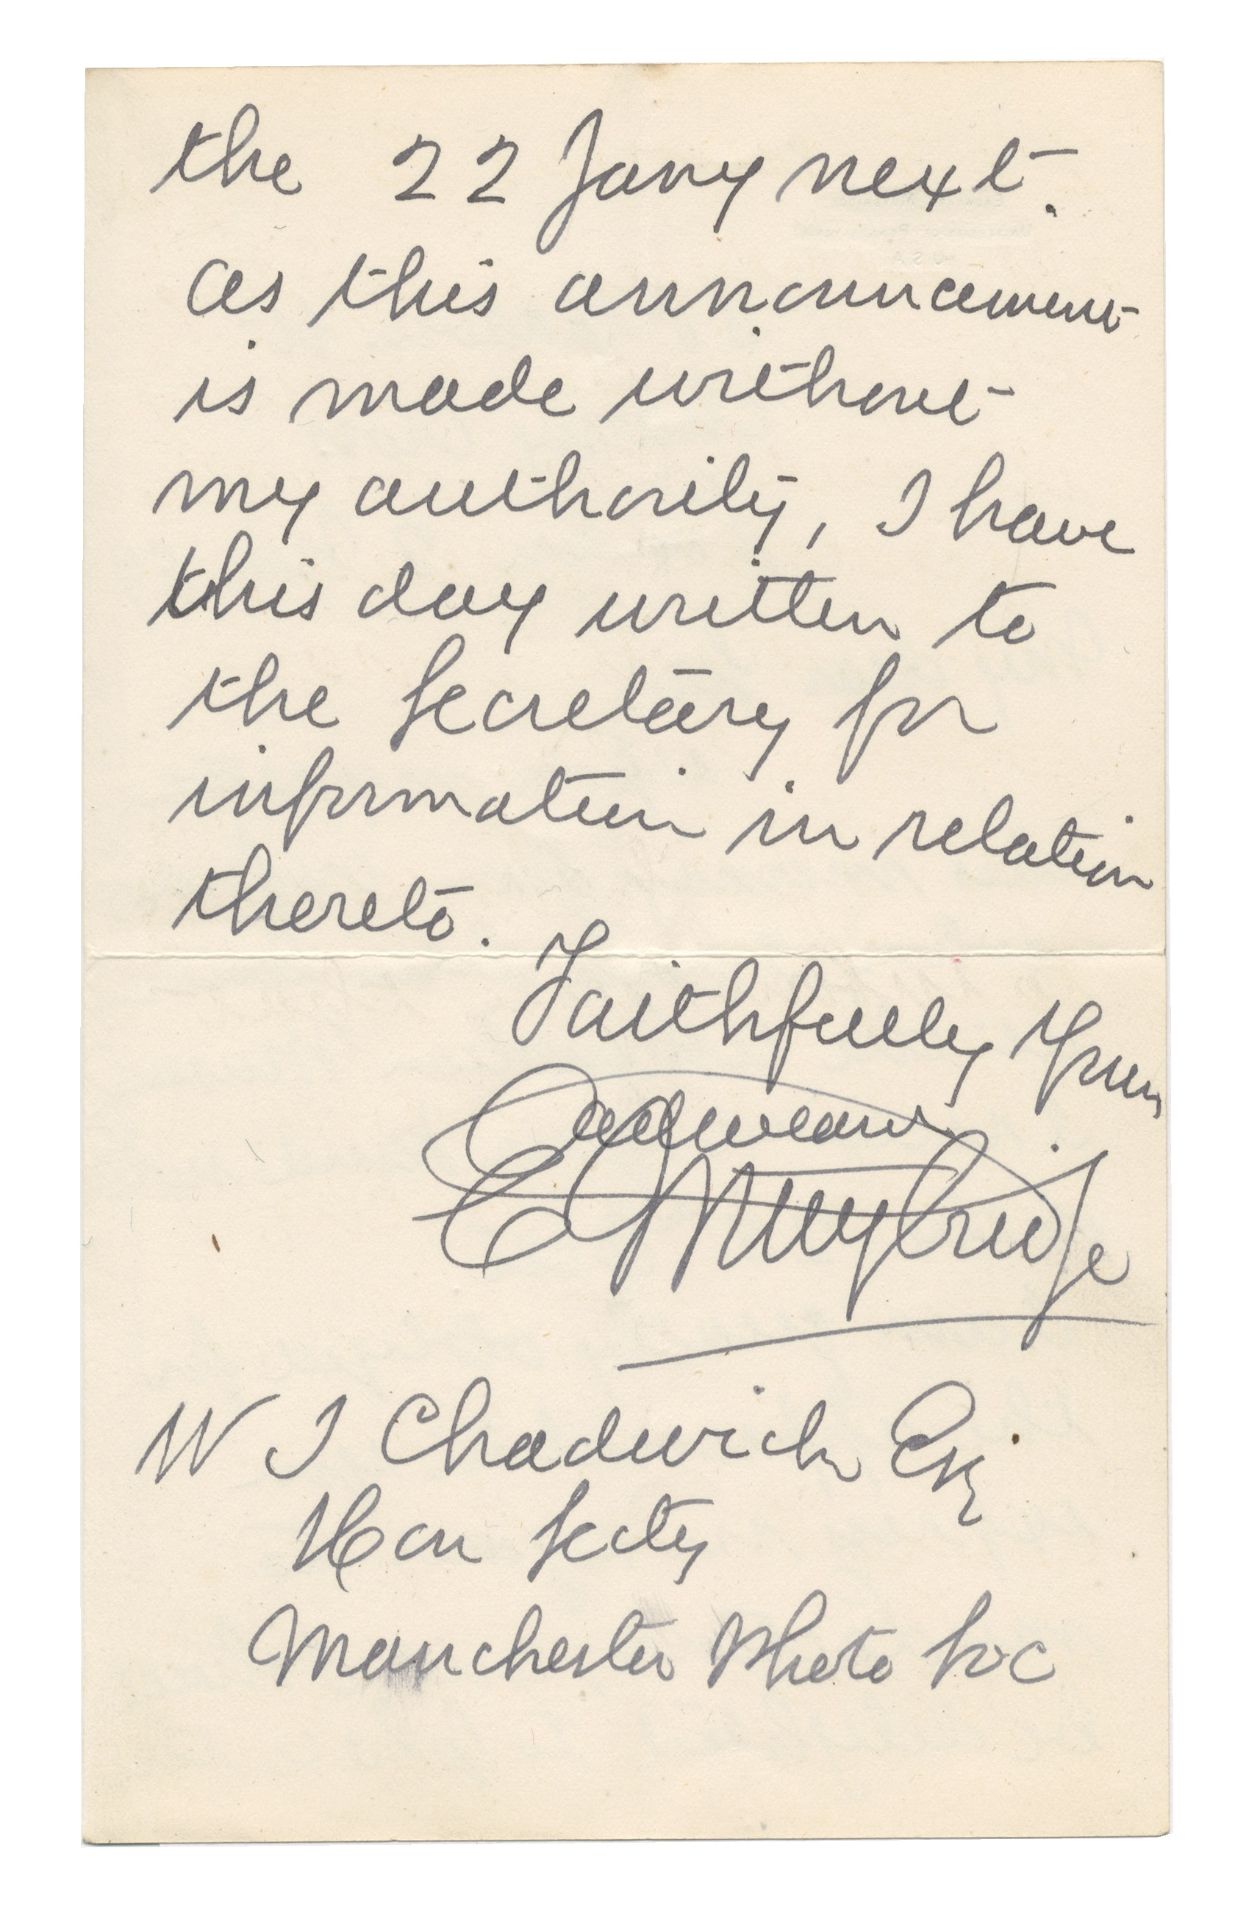 PHOTOGRAPHY MUYBRIDGE (EADWEARD) Autograph letter signed ('Eadweard Muybridge'), to W.J. Chadwick...